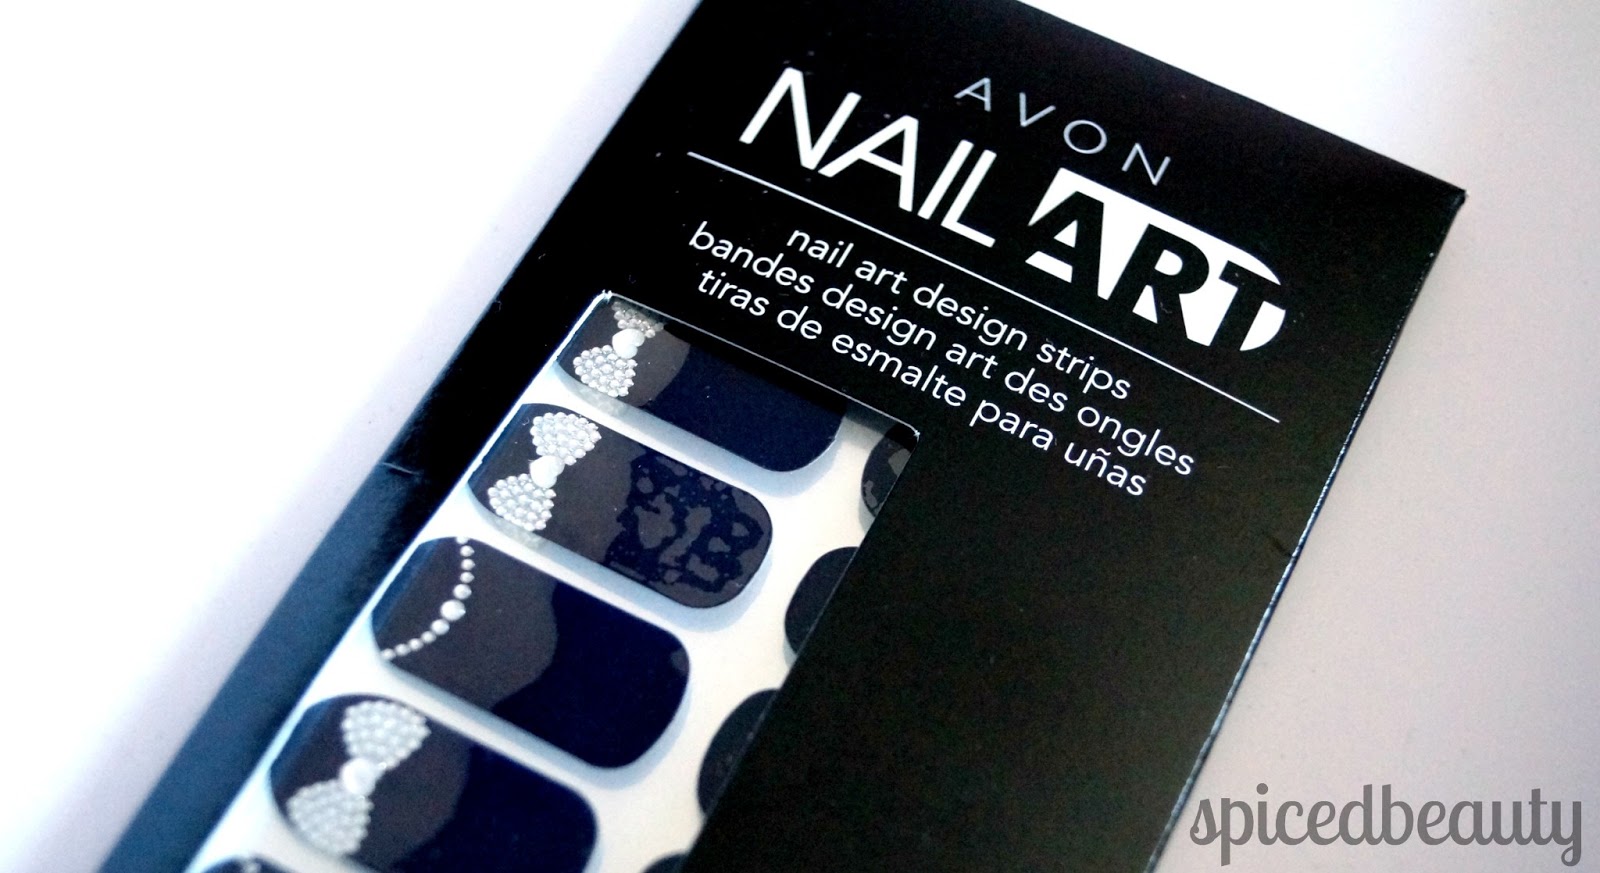 avon nail art design strips french tips